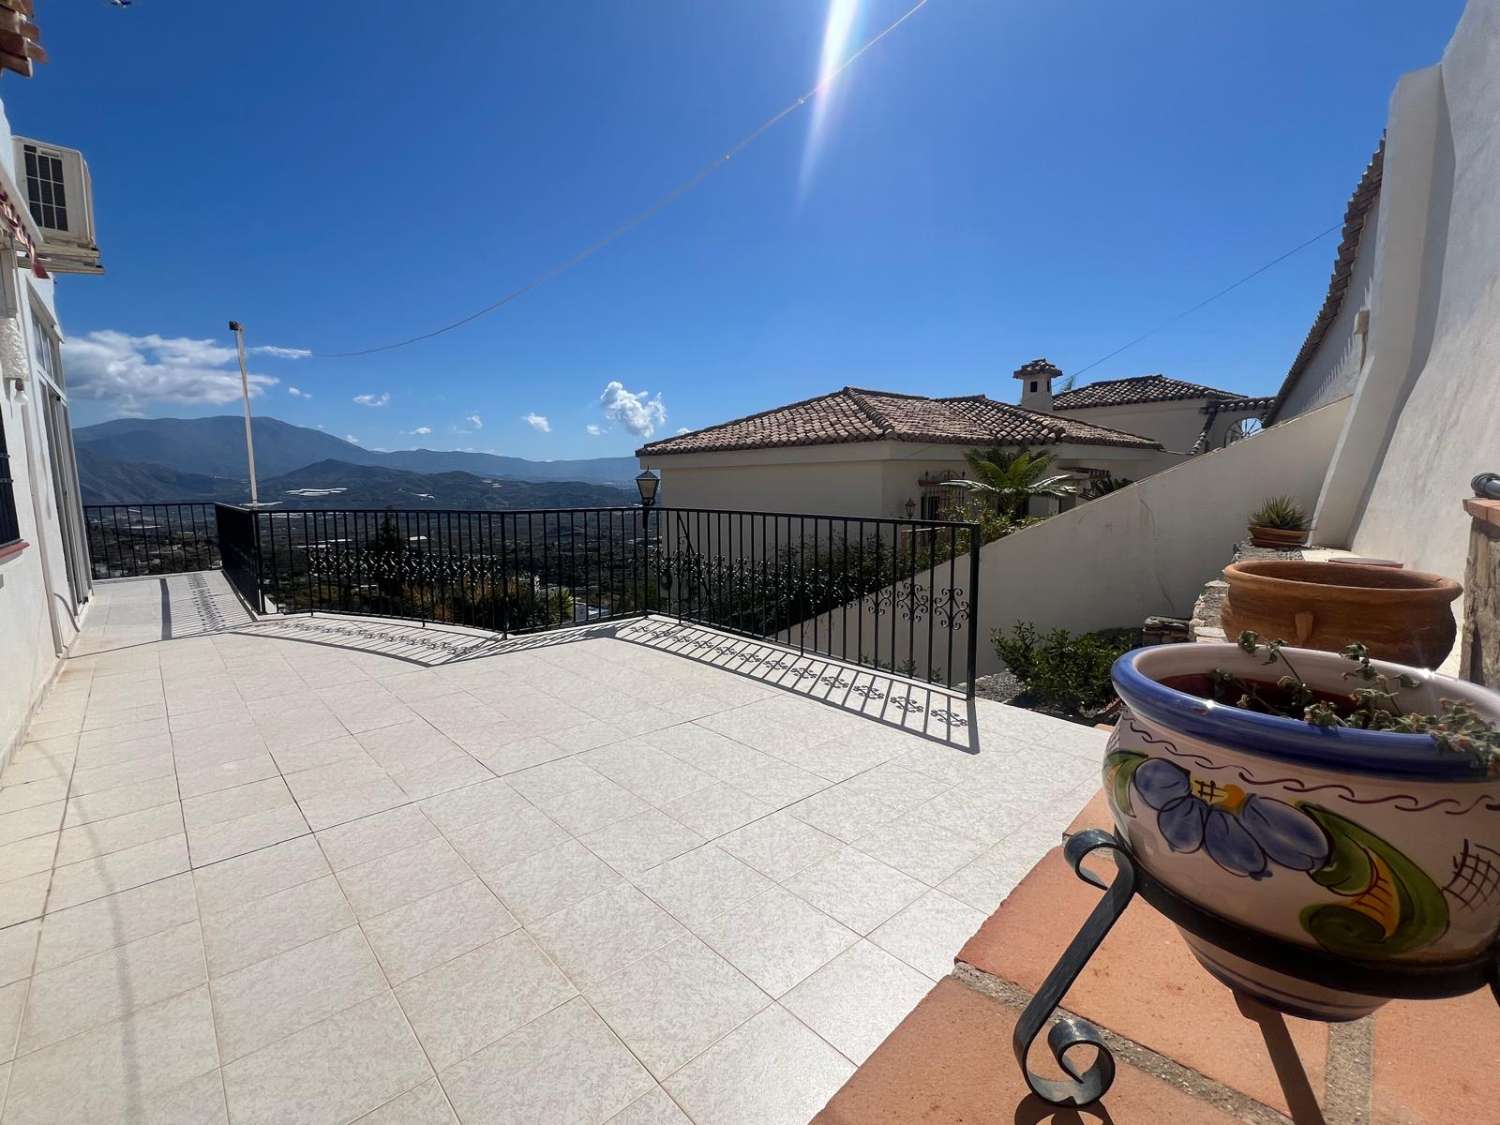 Villa for sale with breathtaking views in Salobrena